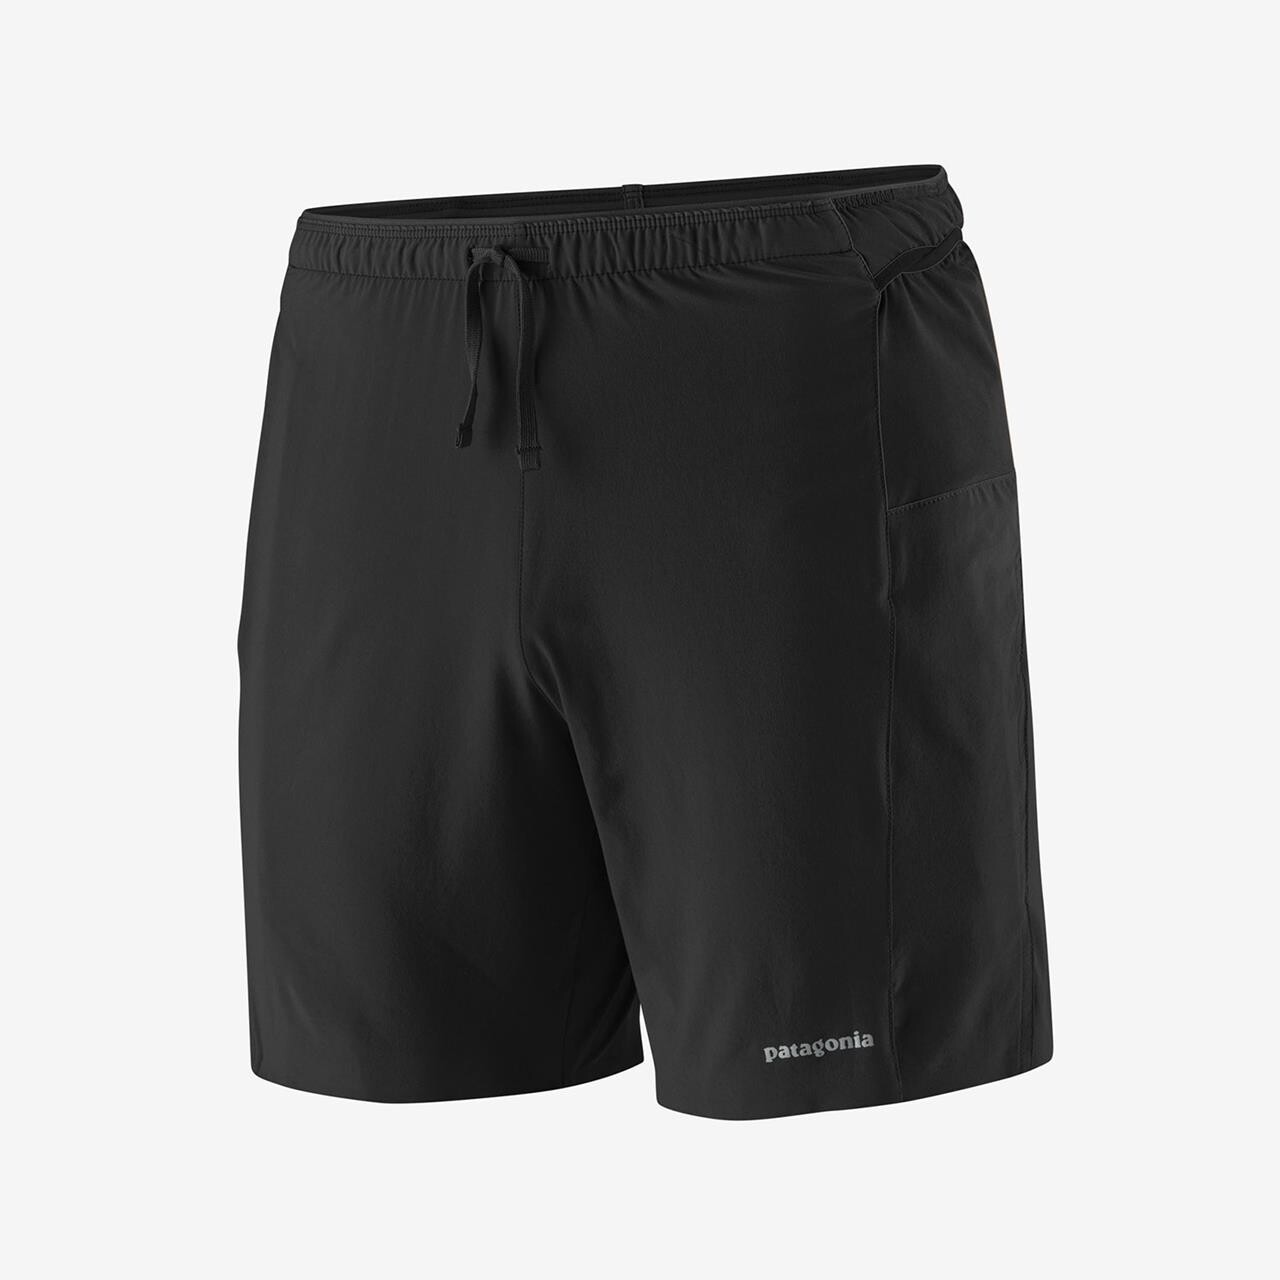 Patagonia Mens Strider Pro Shorts 7" (Sort (BLACK) X-large)